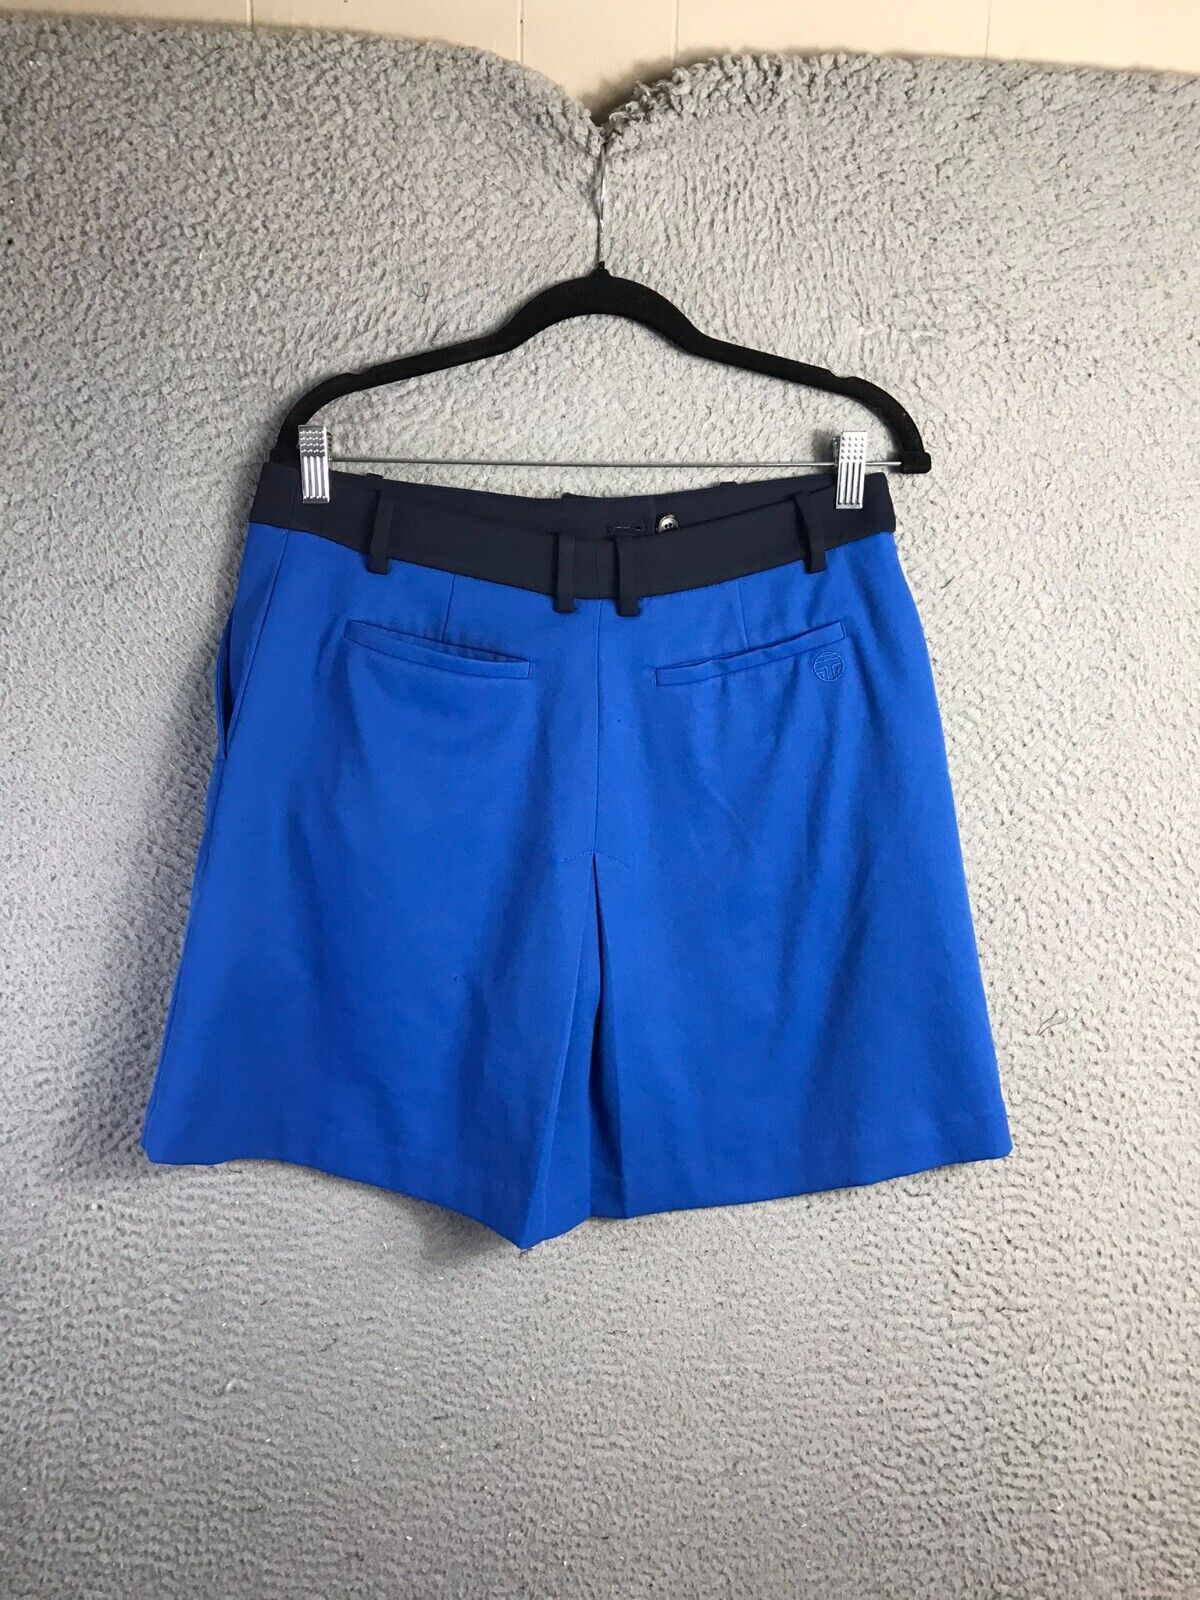 Tory Burch Sport Skirt Womens L Blue Tennis Skort… - image 8